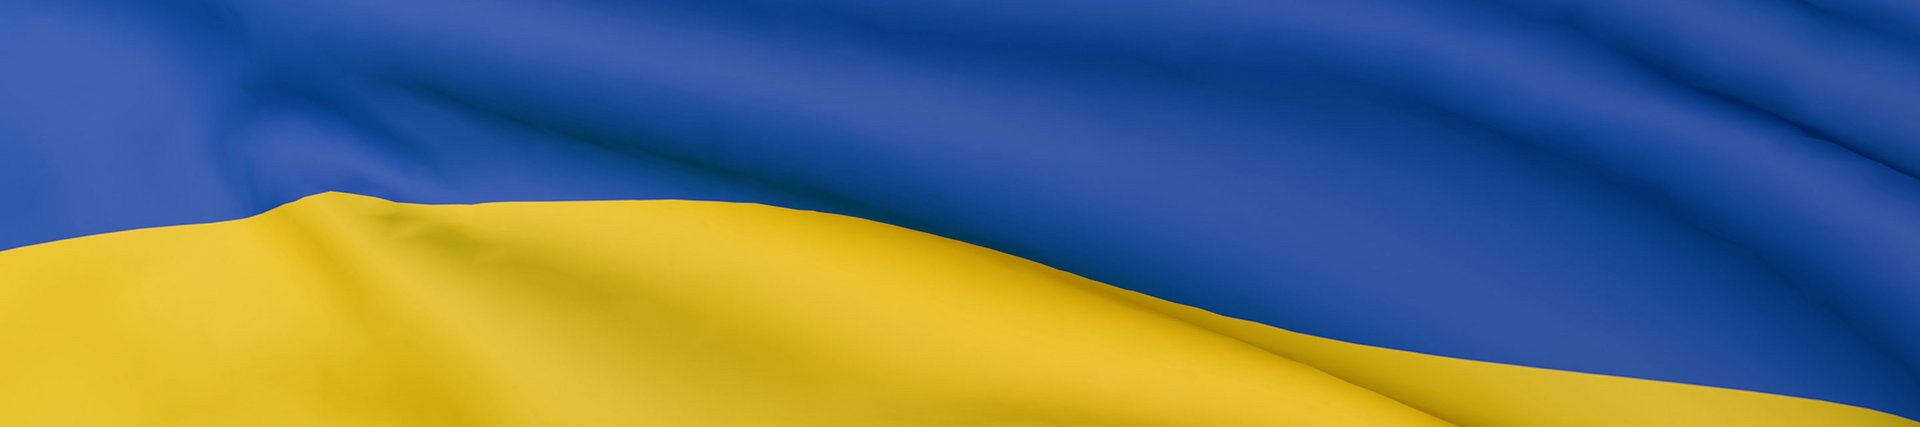 Ukraine-Flagge-2880-x-640.jpg